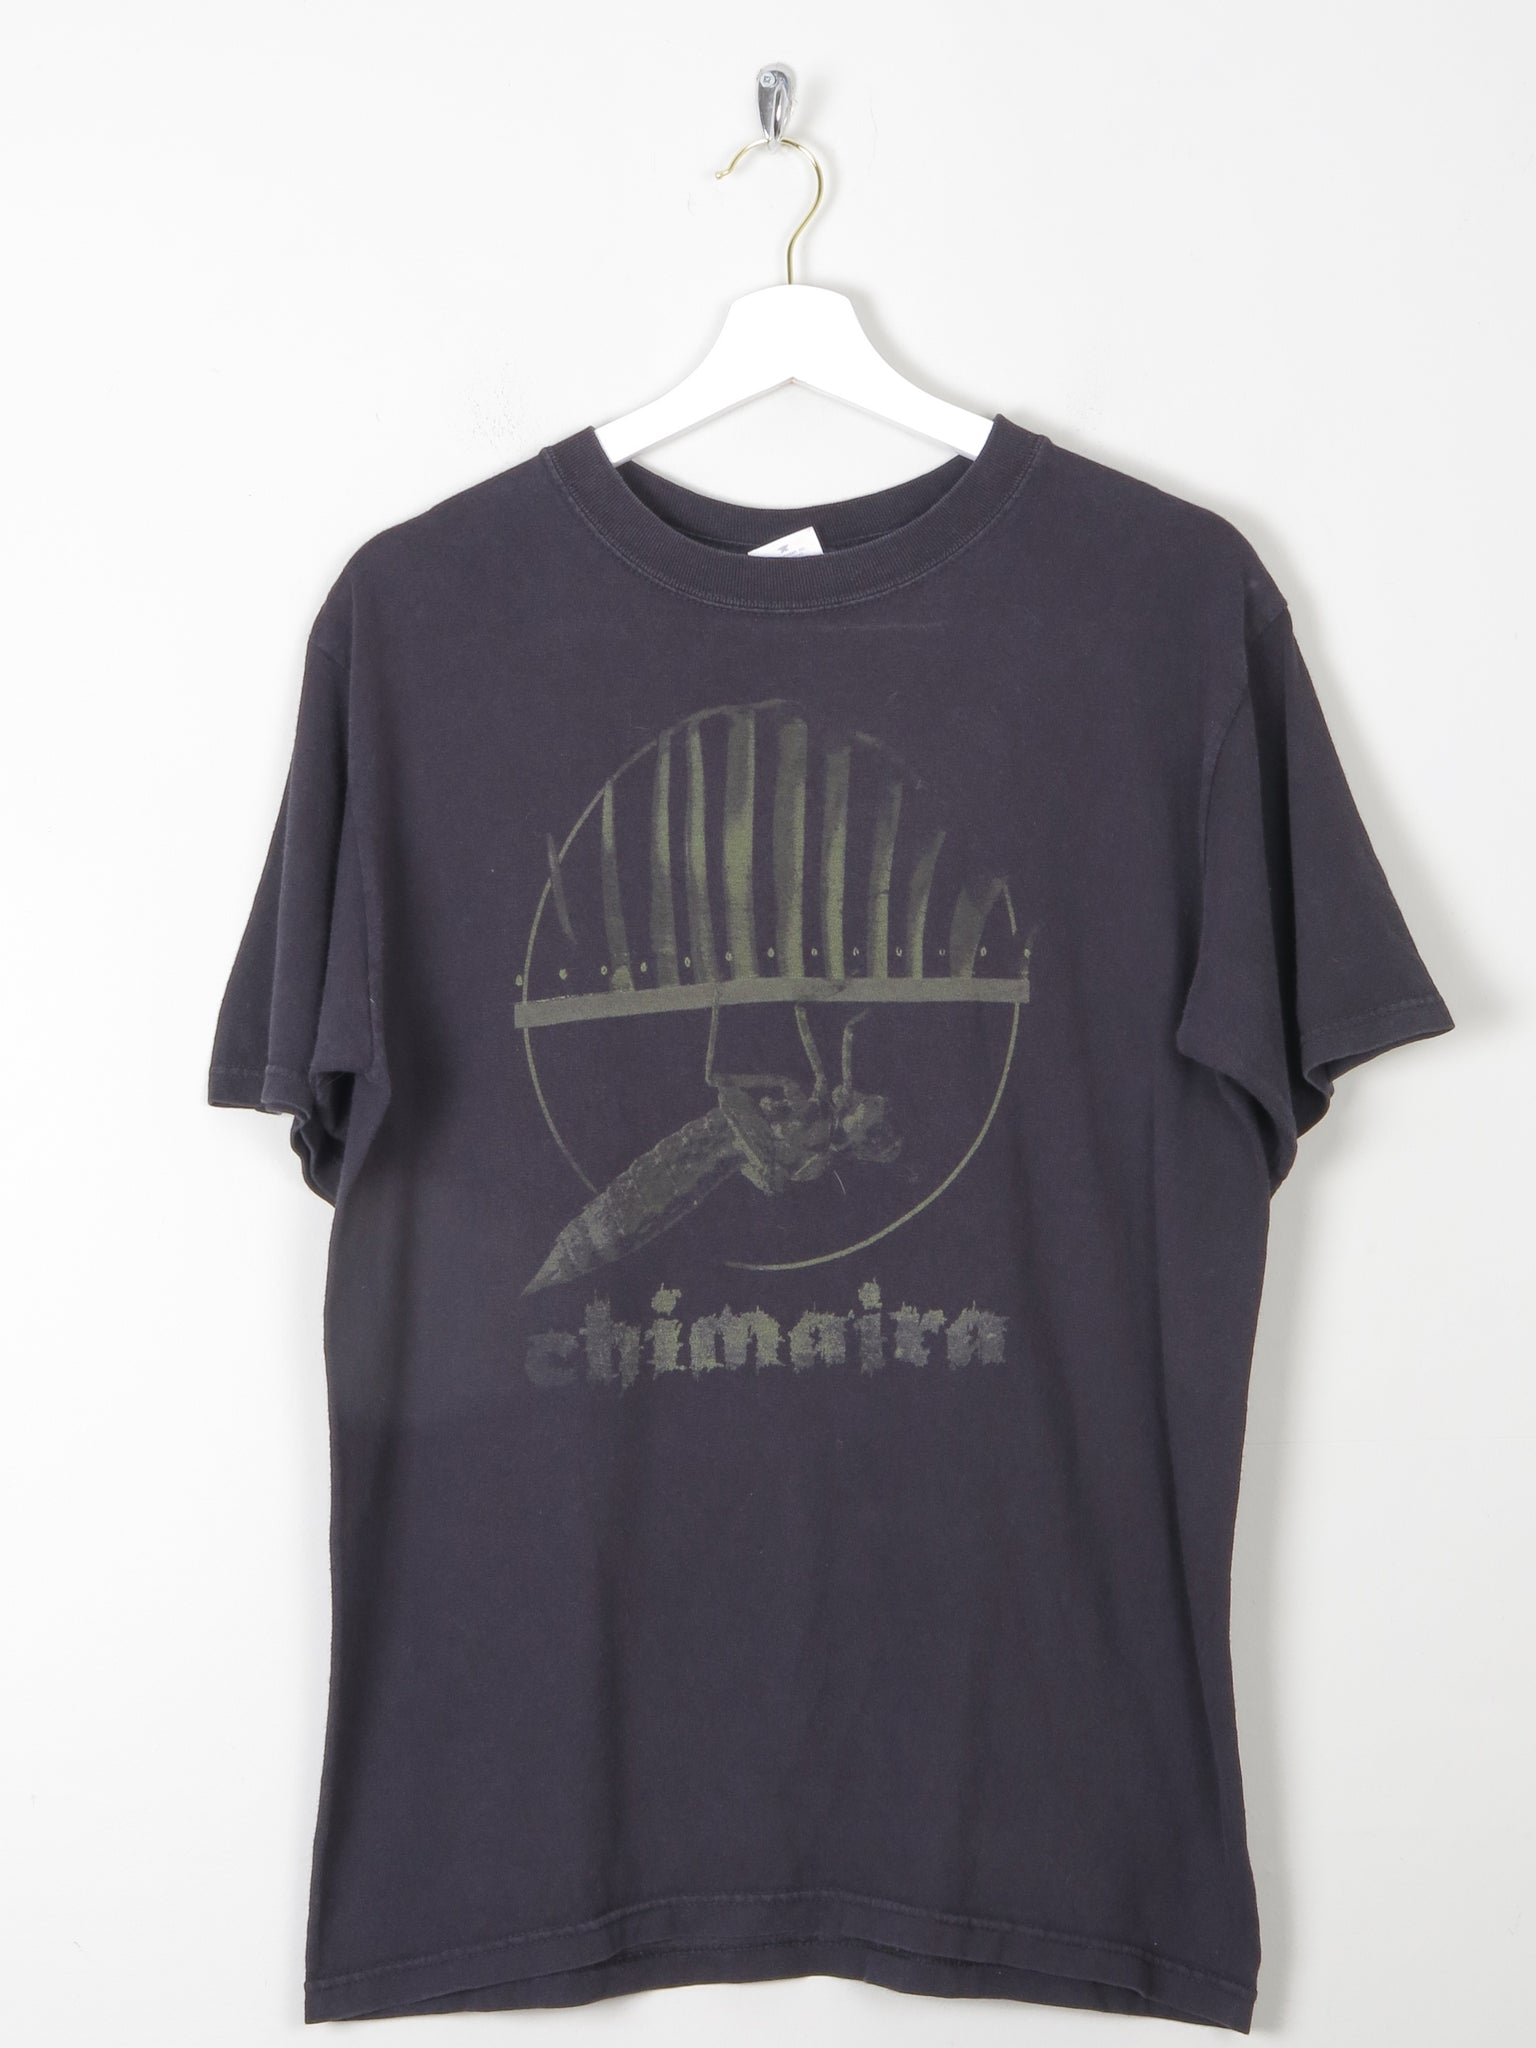 Vintage Black Rock T-shirt Chimaira 2007 Tour M